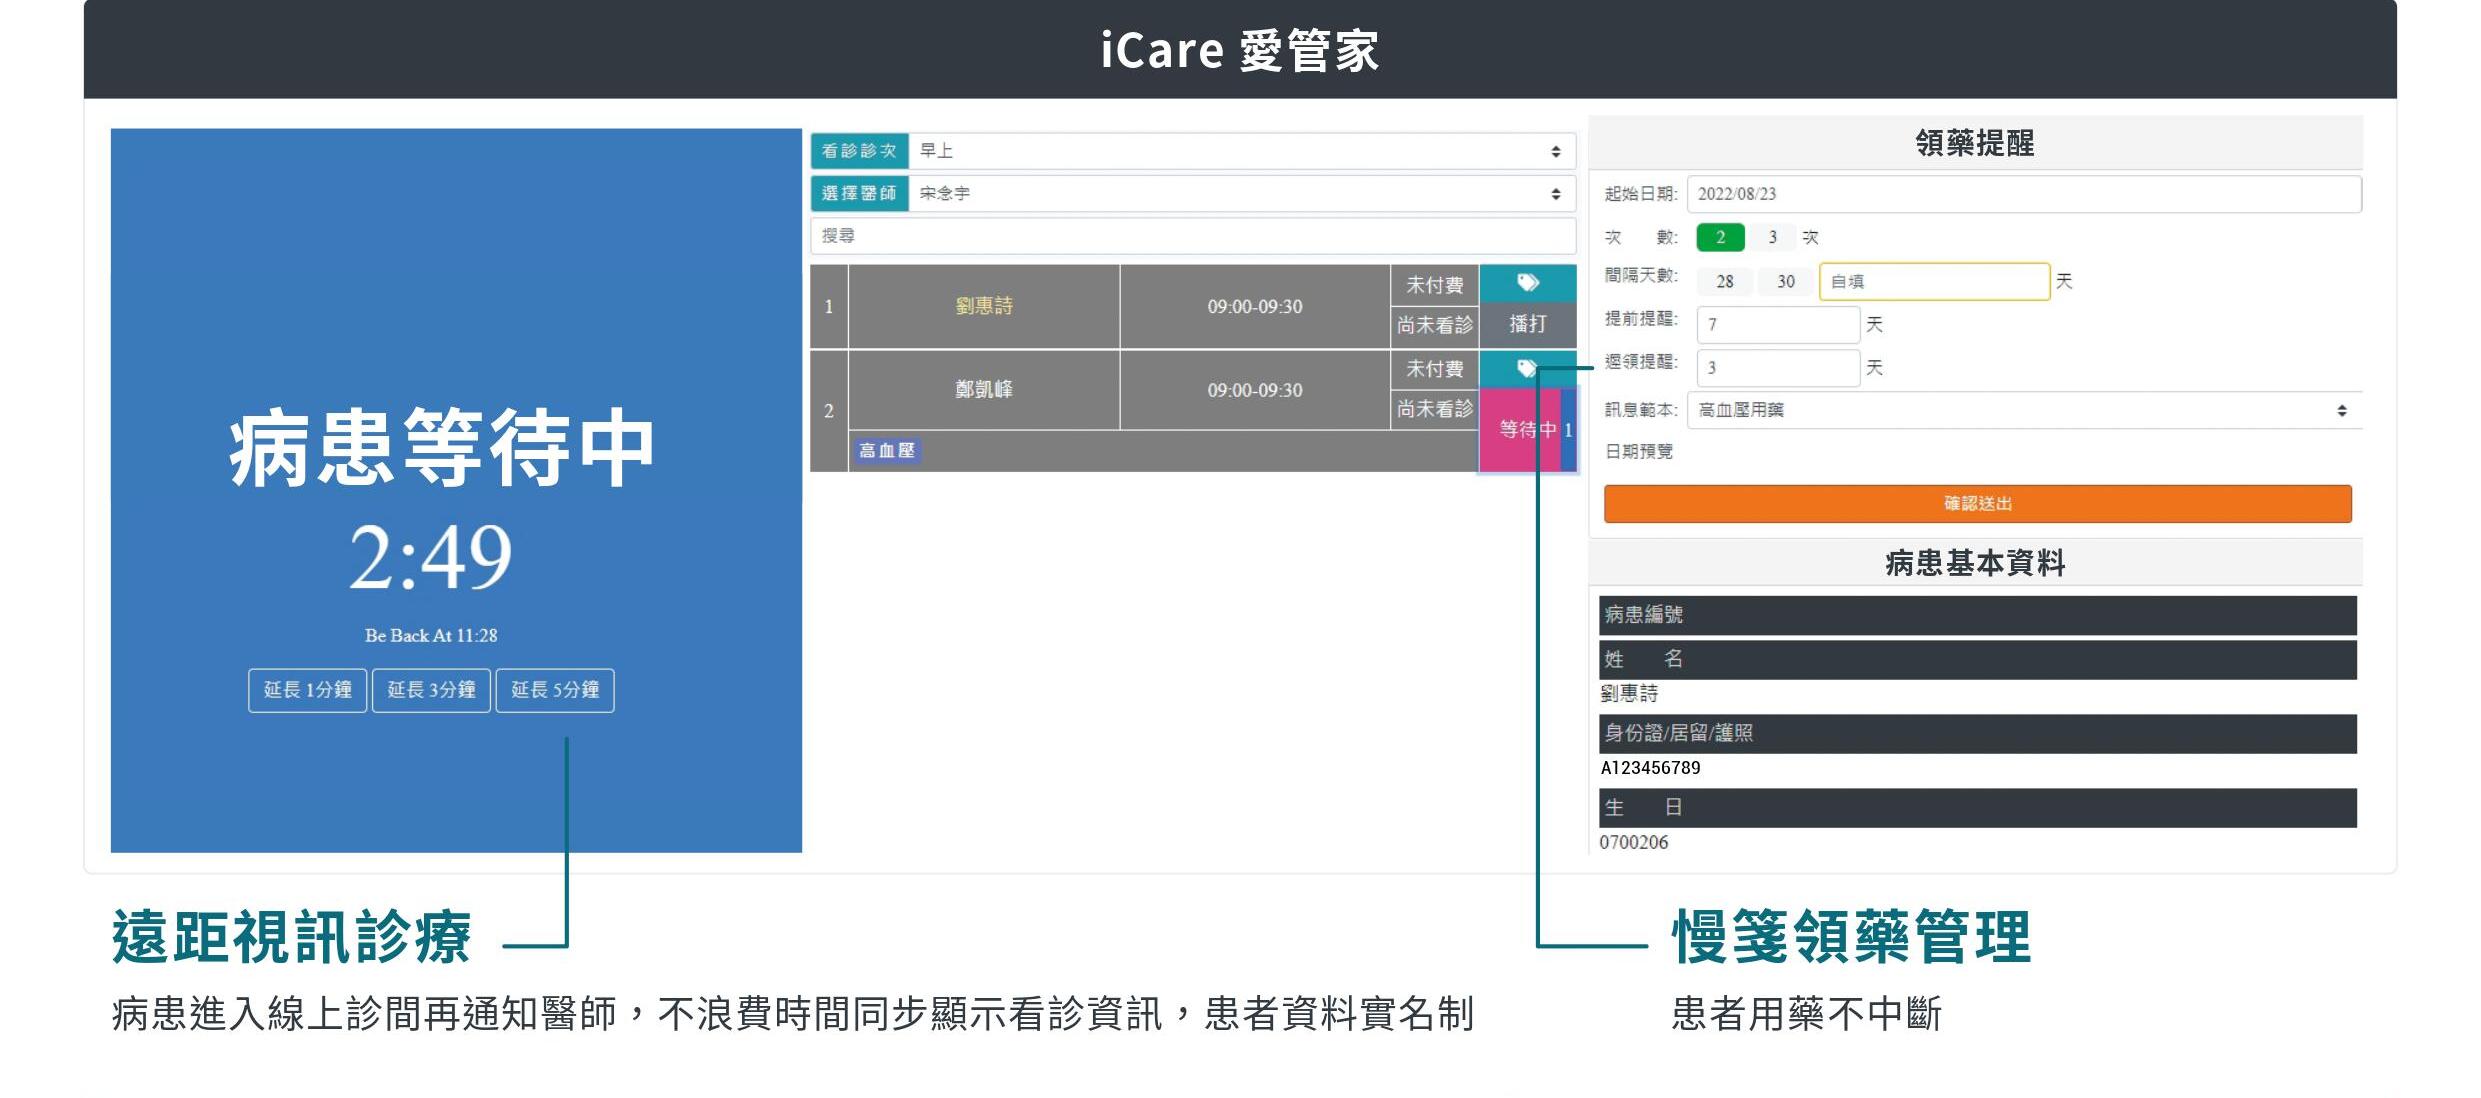 iCare管理系統的介面介紹-遠距視訊診療、慢箋領藥管理
        